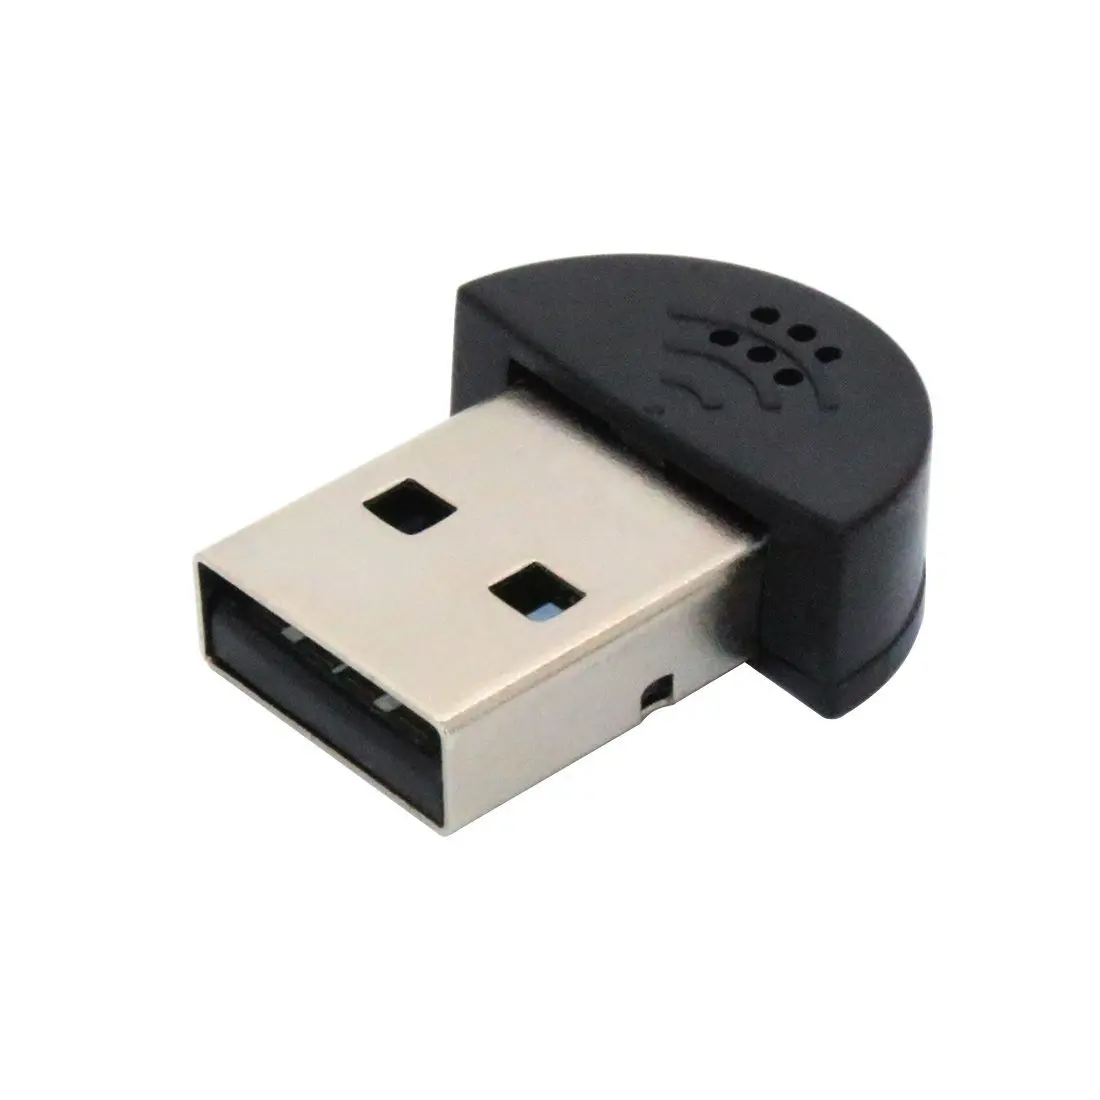 Bluetooth usb adapter драйвер. Адаптер Bluetooth 2.0+EDR USB. Адаптер Bluetooth-USB ti cc2540. USB Dongle Bluetooth 5.0. Bluetooth адаптер Dongle.